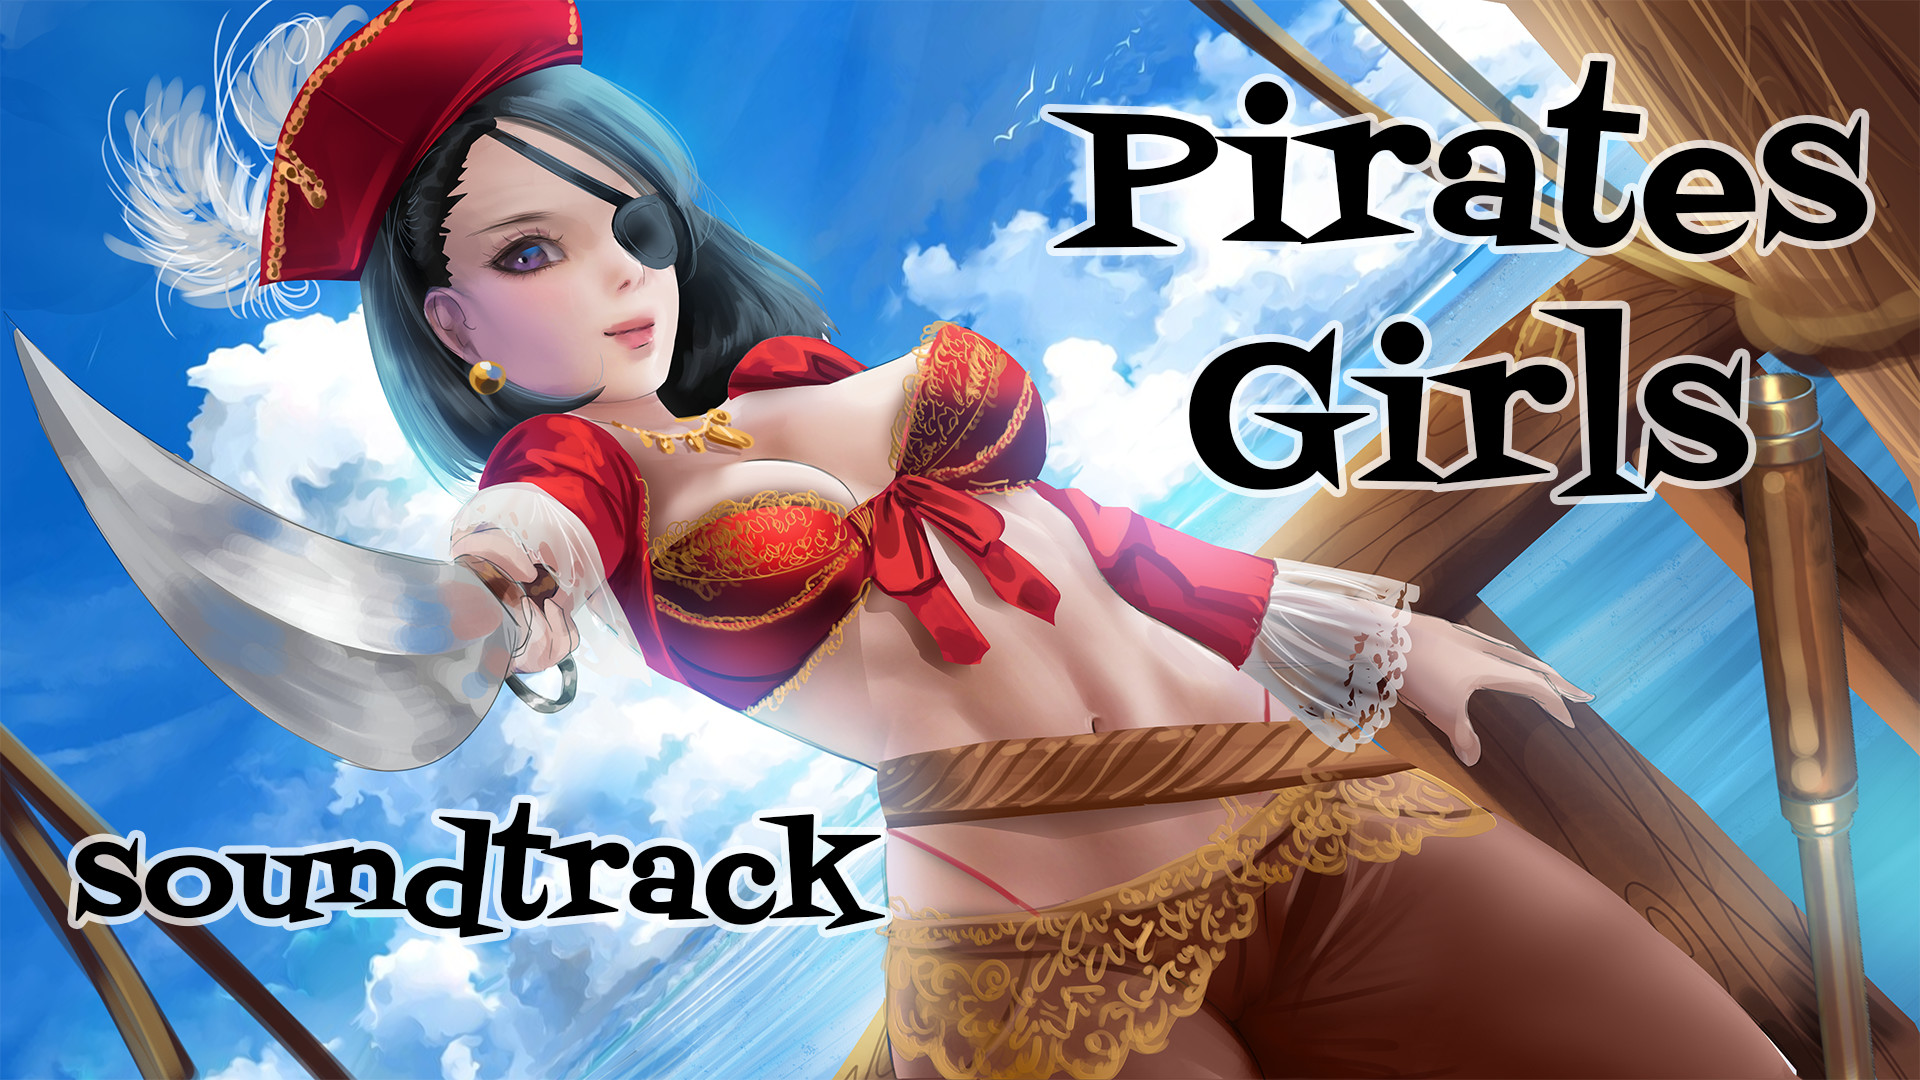 Pirates Girls Soundtrack Featured Screenshot #1